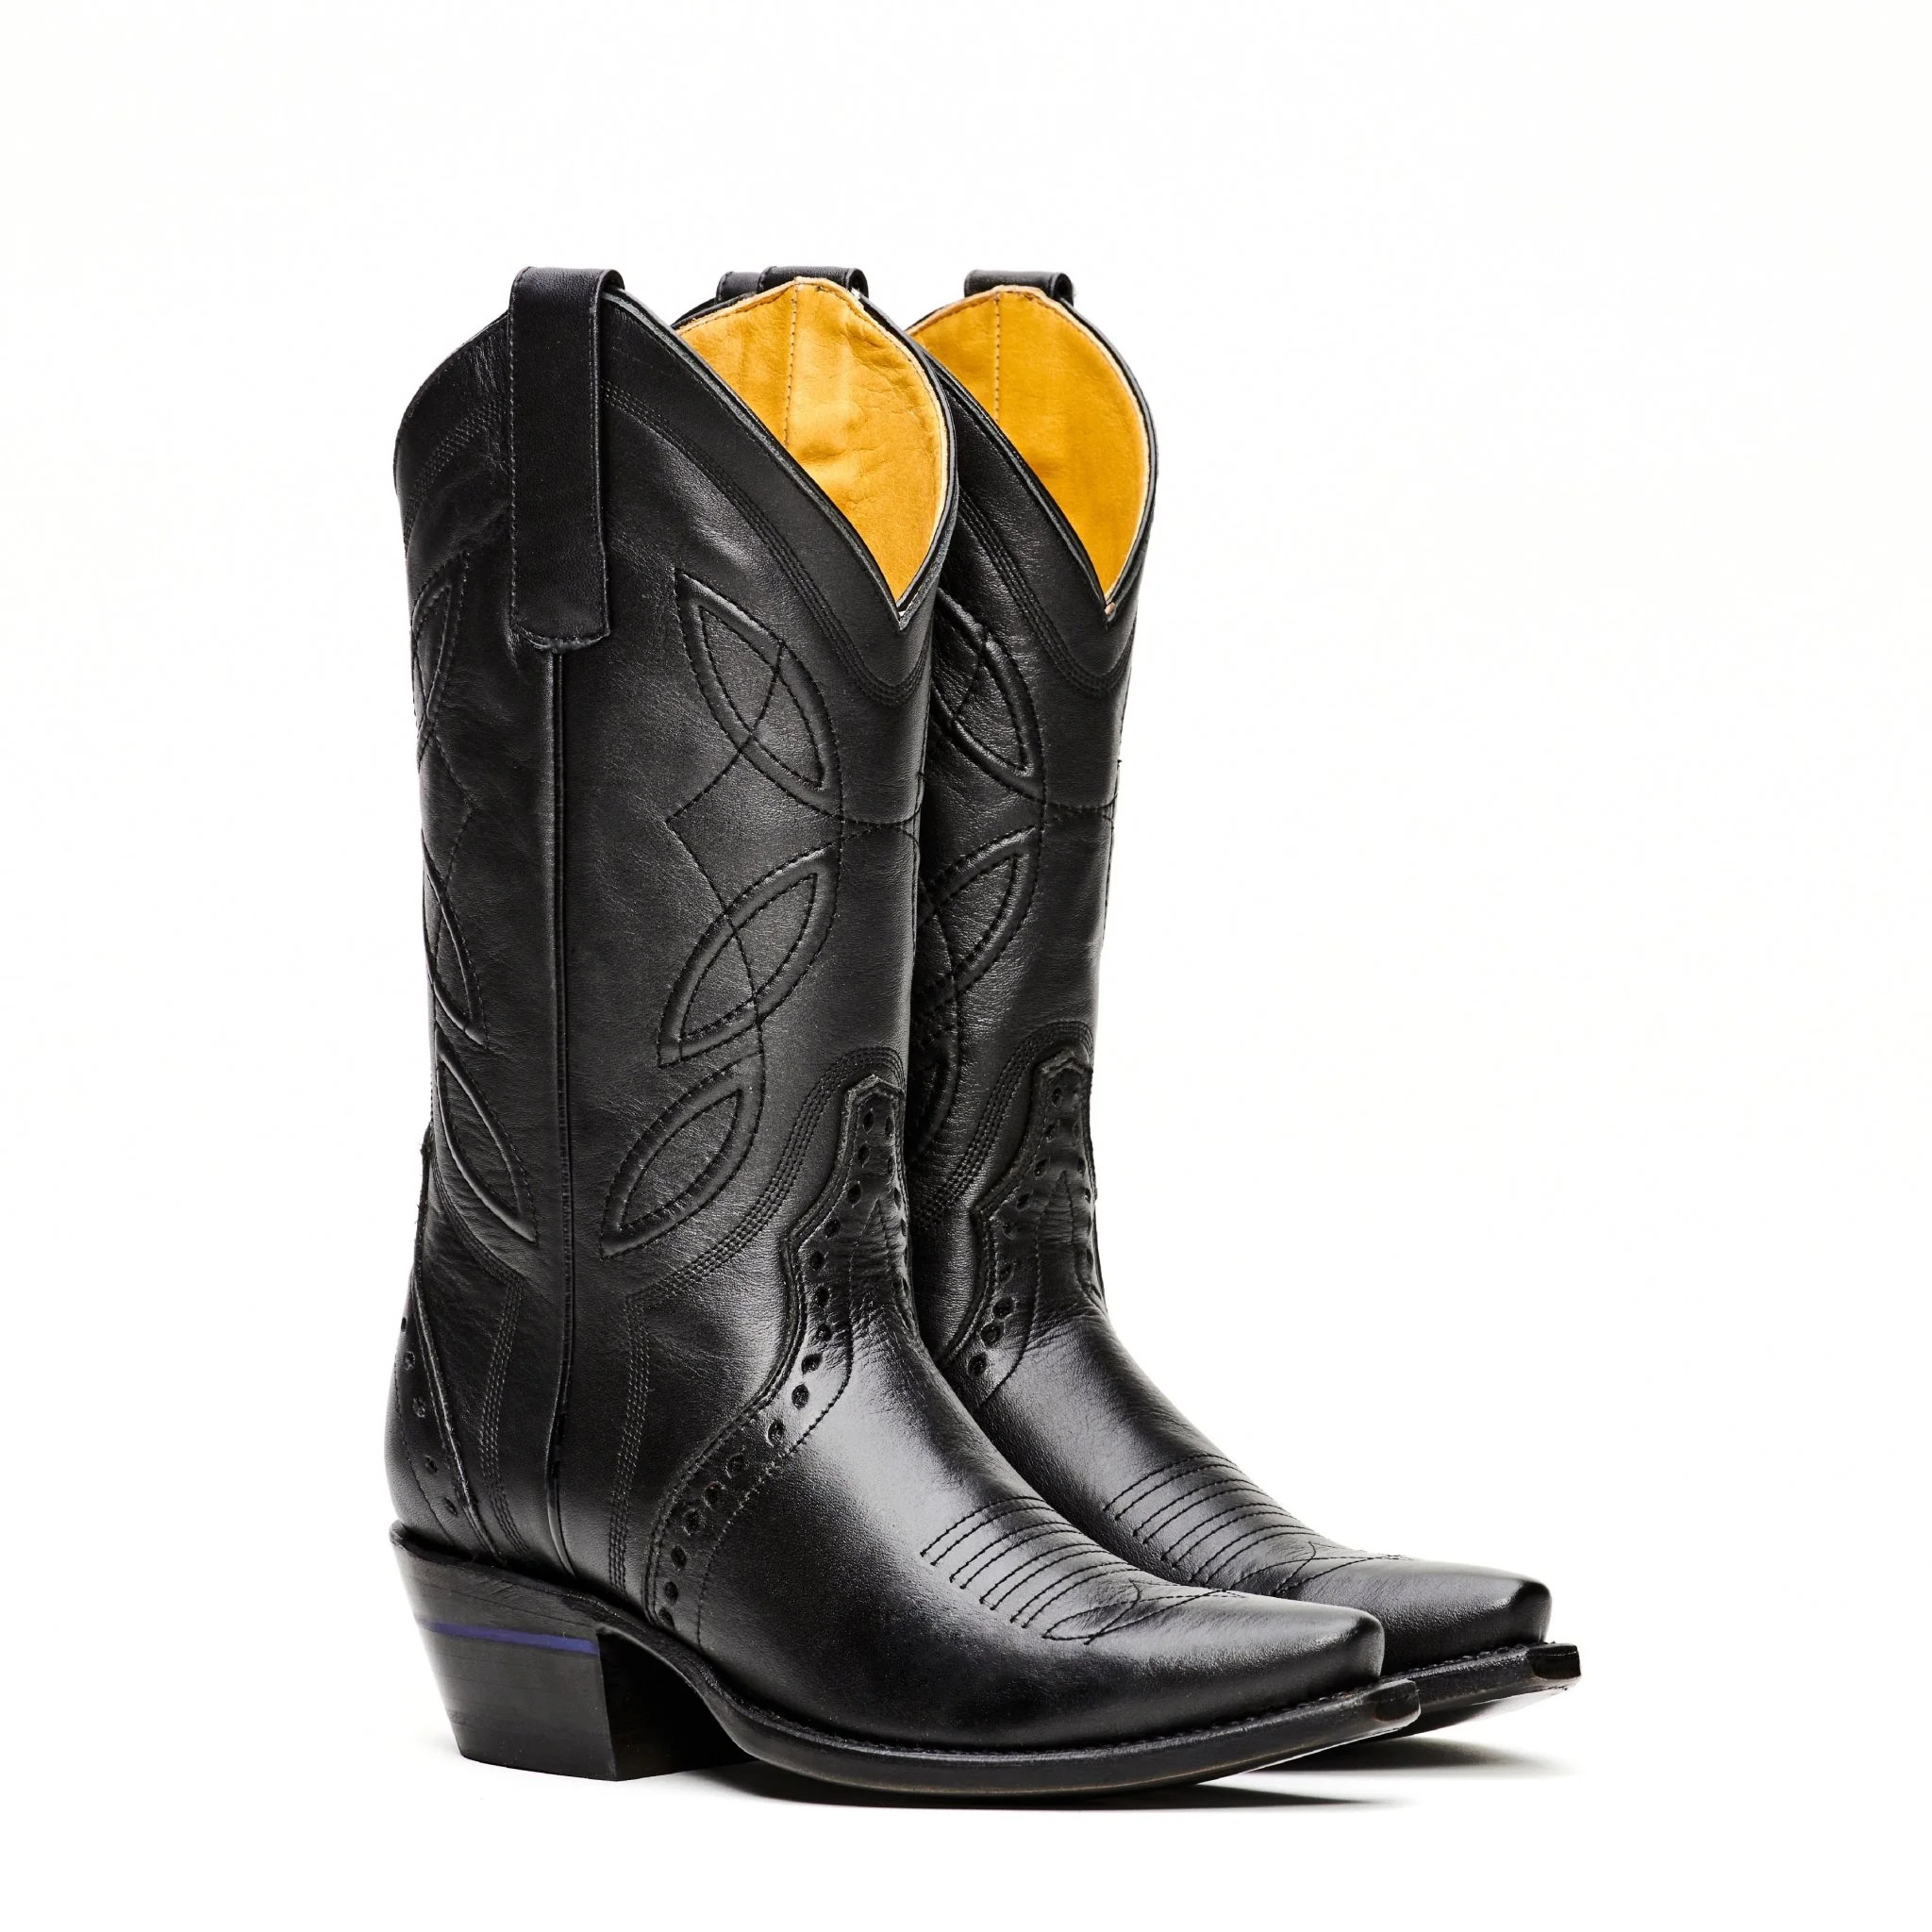 The Rio Grande Women's Corded Cowboy Boot | Alvies 